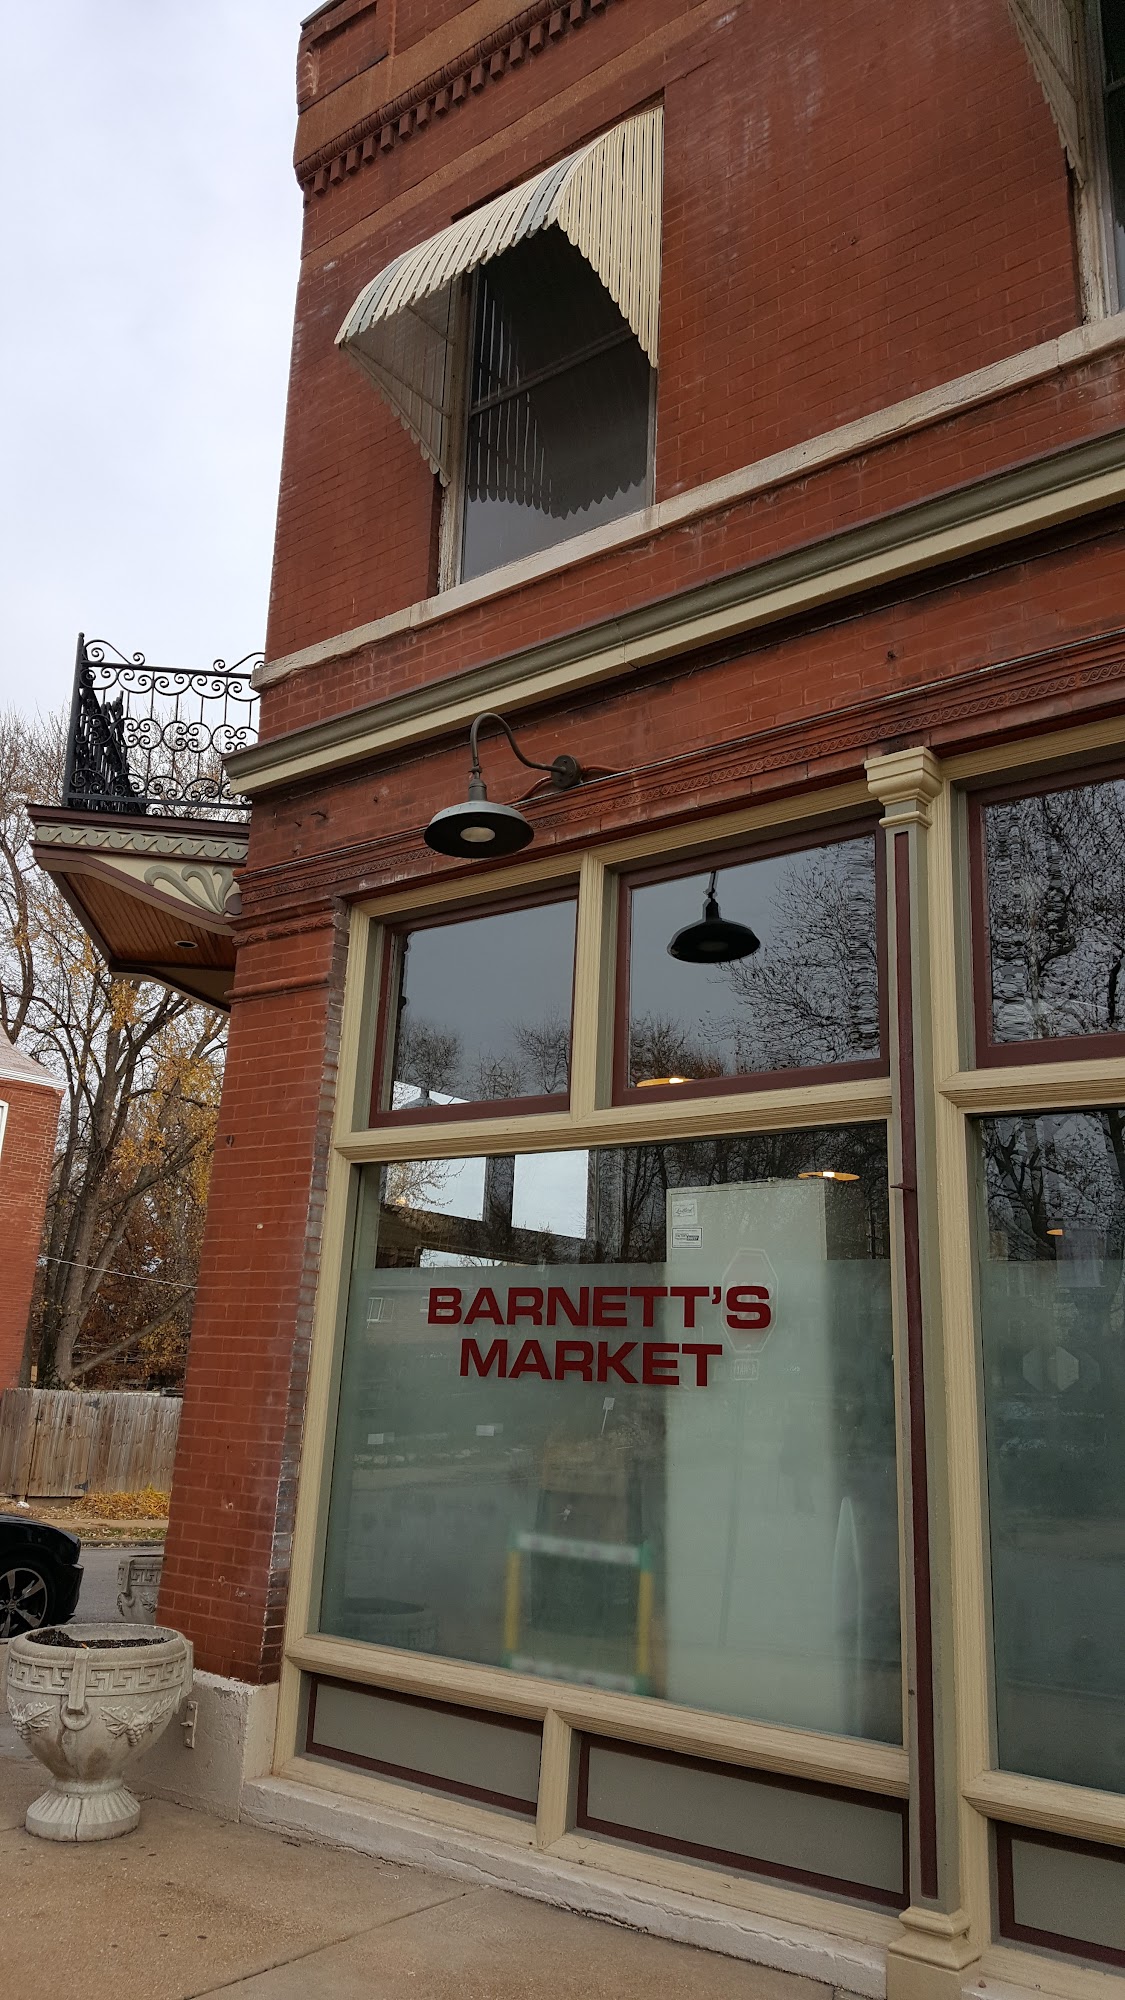 Barnett's Market